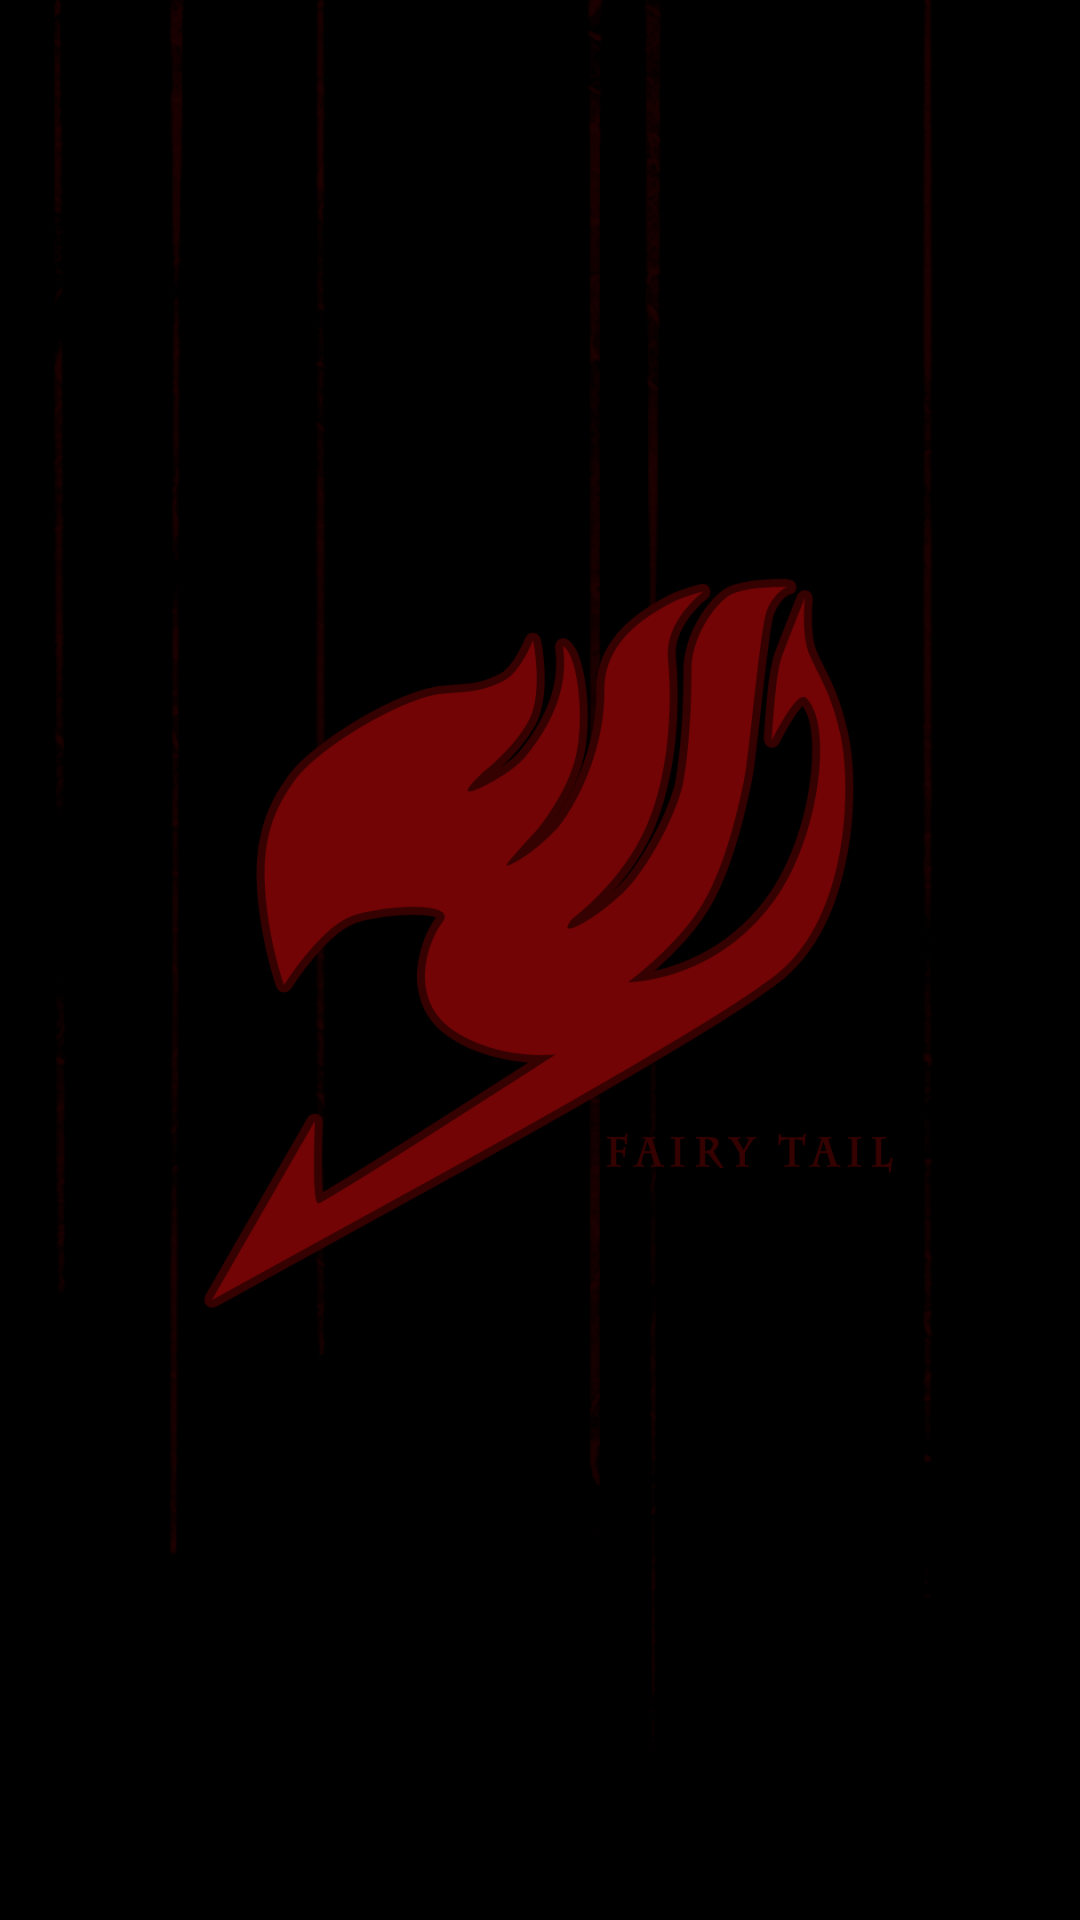 Fairy Tail Logo Wallpaper Full HD On Wallpaper 1080p HD. Fond